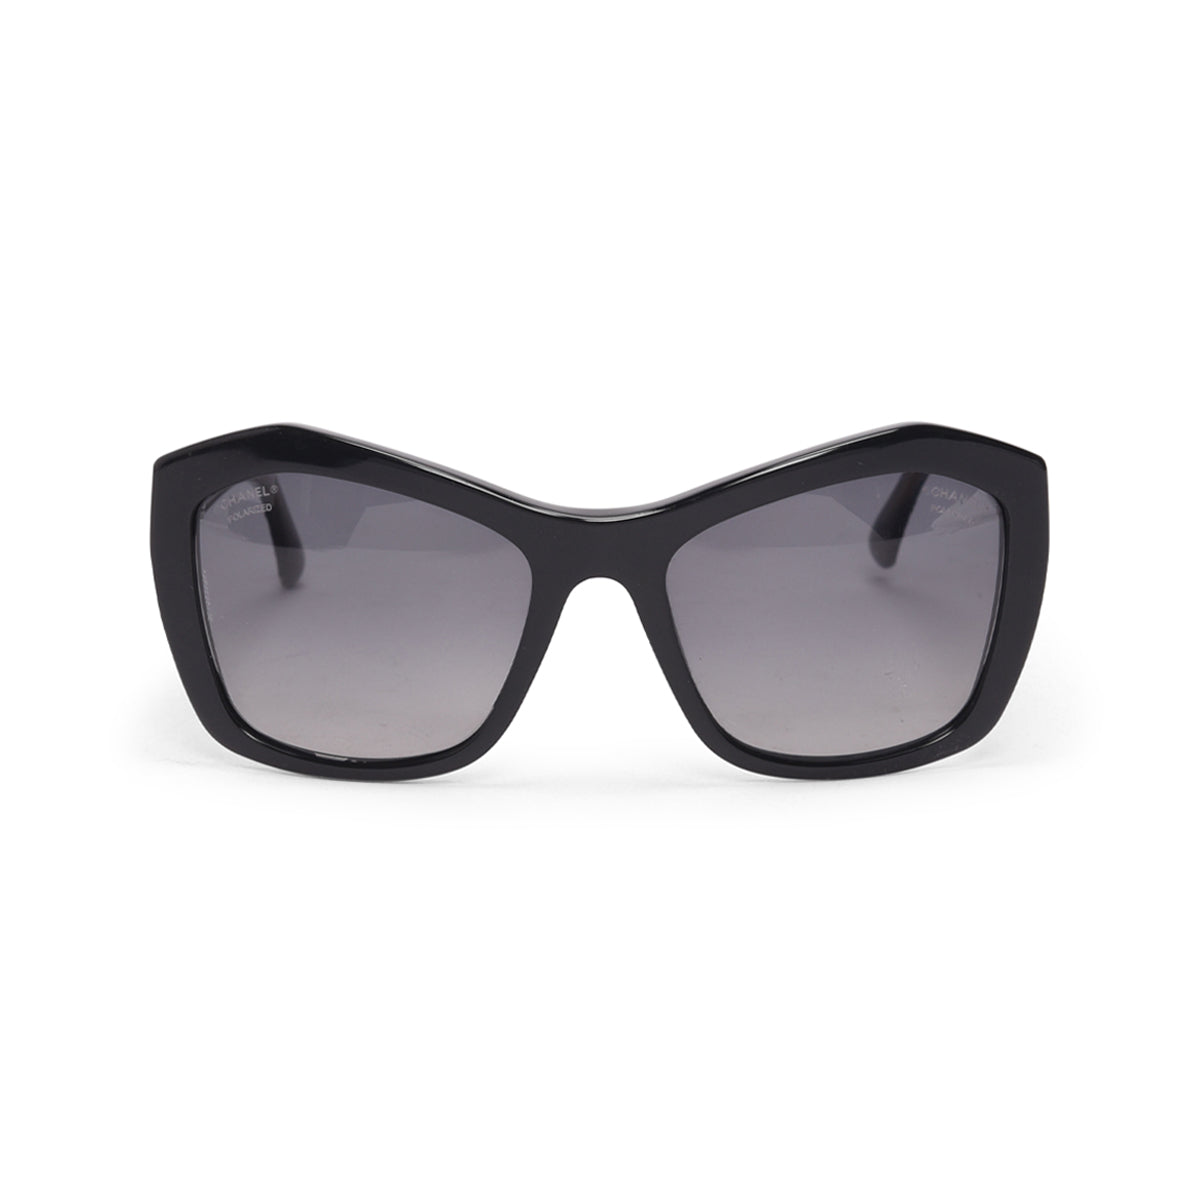 Chanel - Butterfly Sunglasses - Black White Gray - Chanel Eyewear